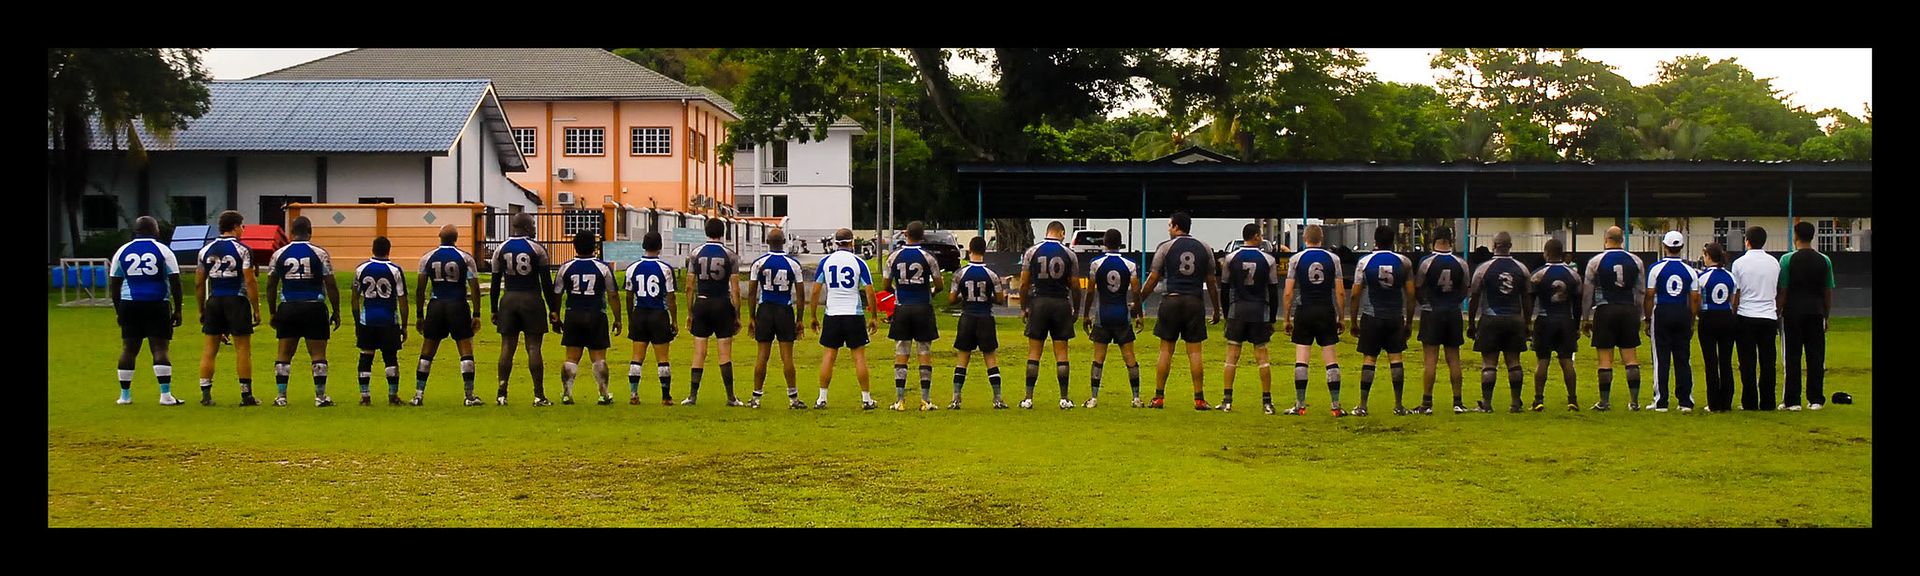 KKP Rugby 05